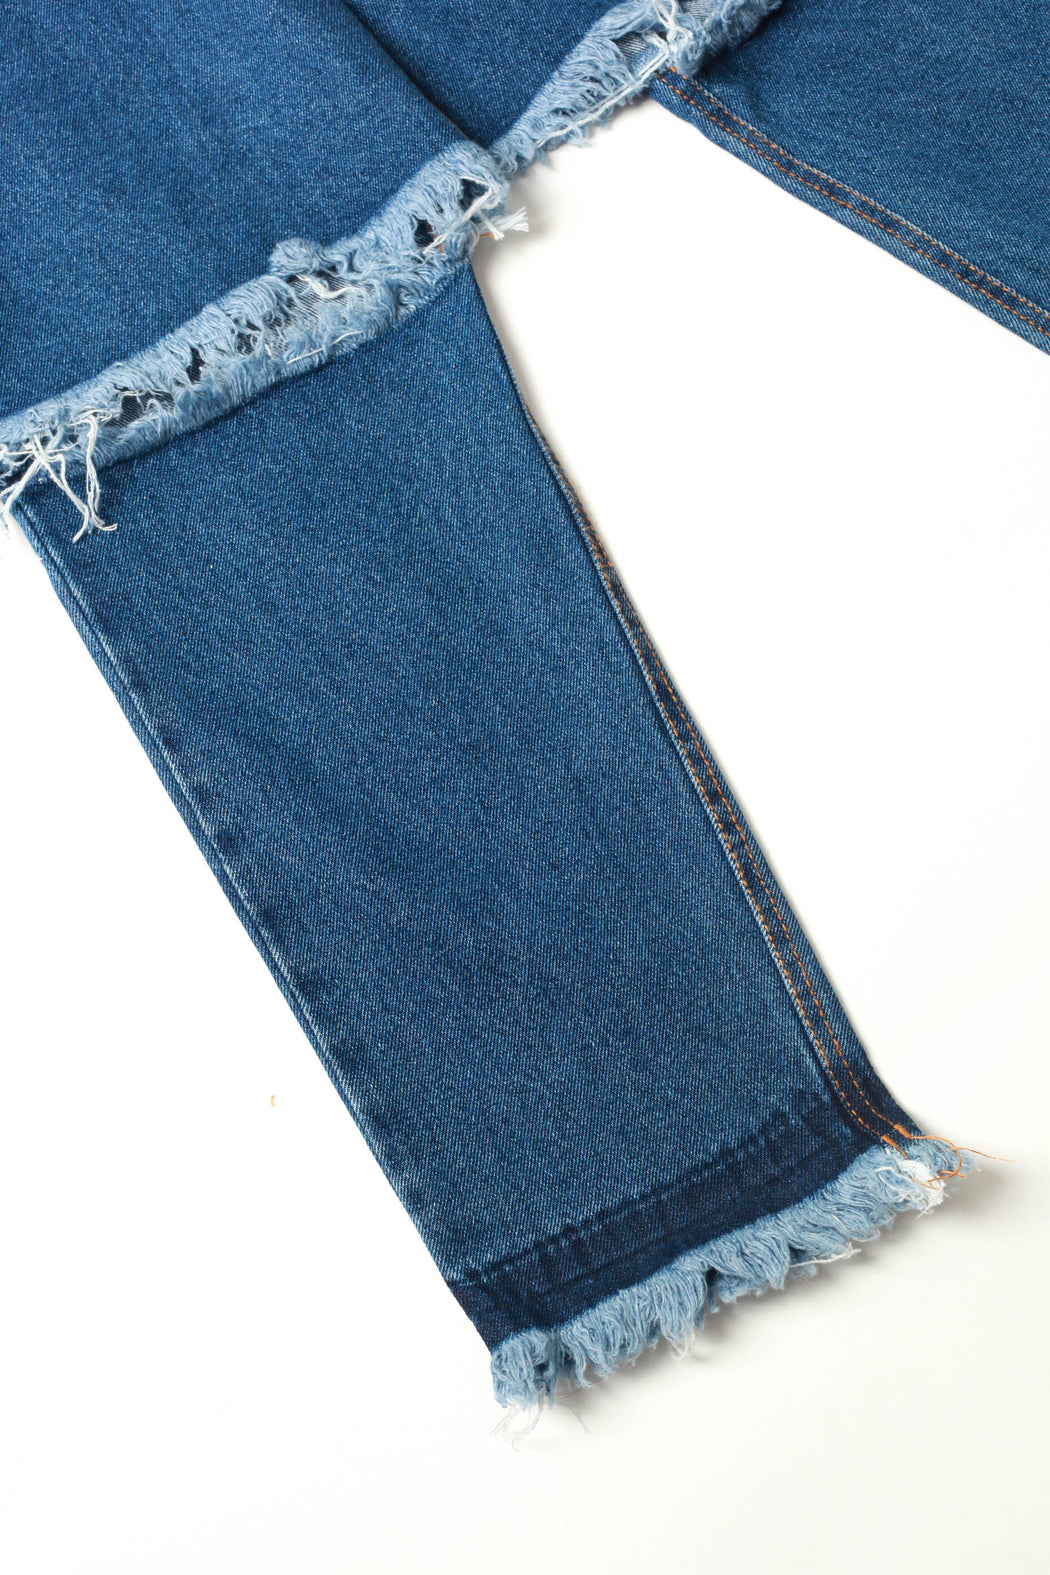 Lee Jeans Body Optix Skinny Stretch-denim Dungarees in Blue | Lyst